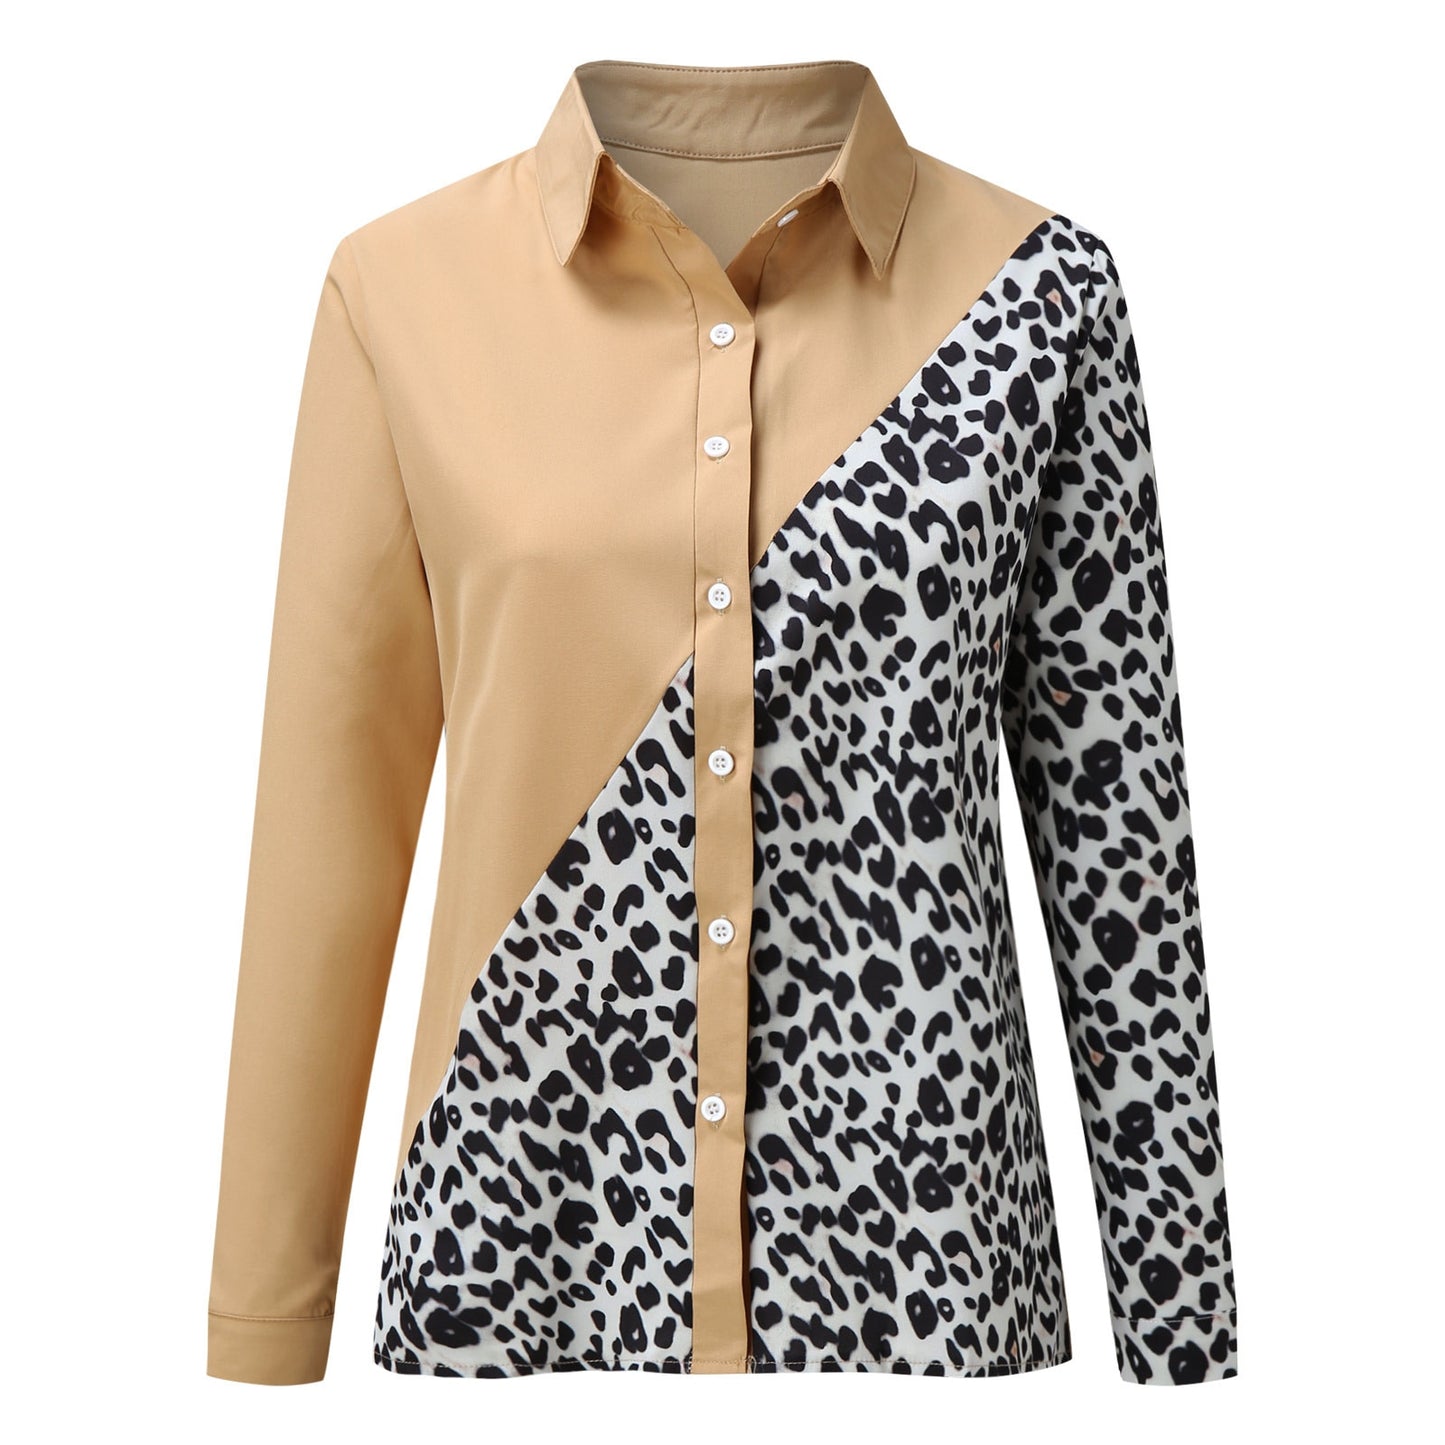 Leopard Blouse Autumn Long Sleeve Shirt